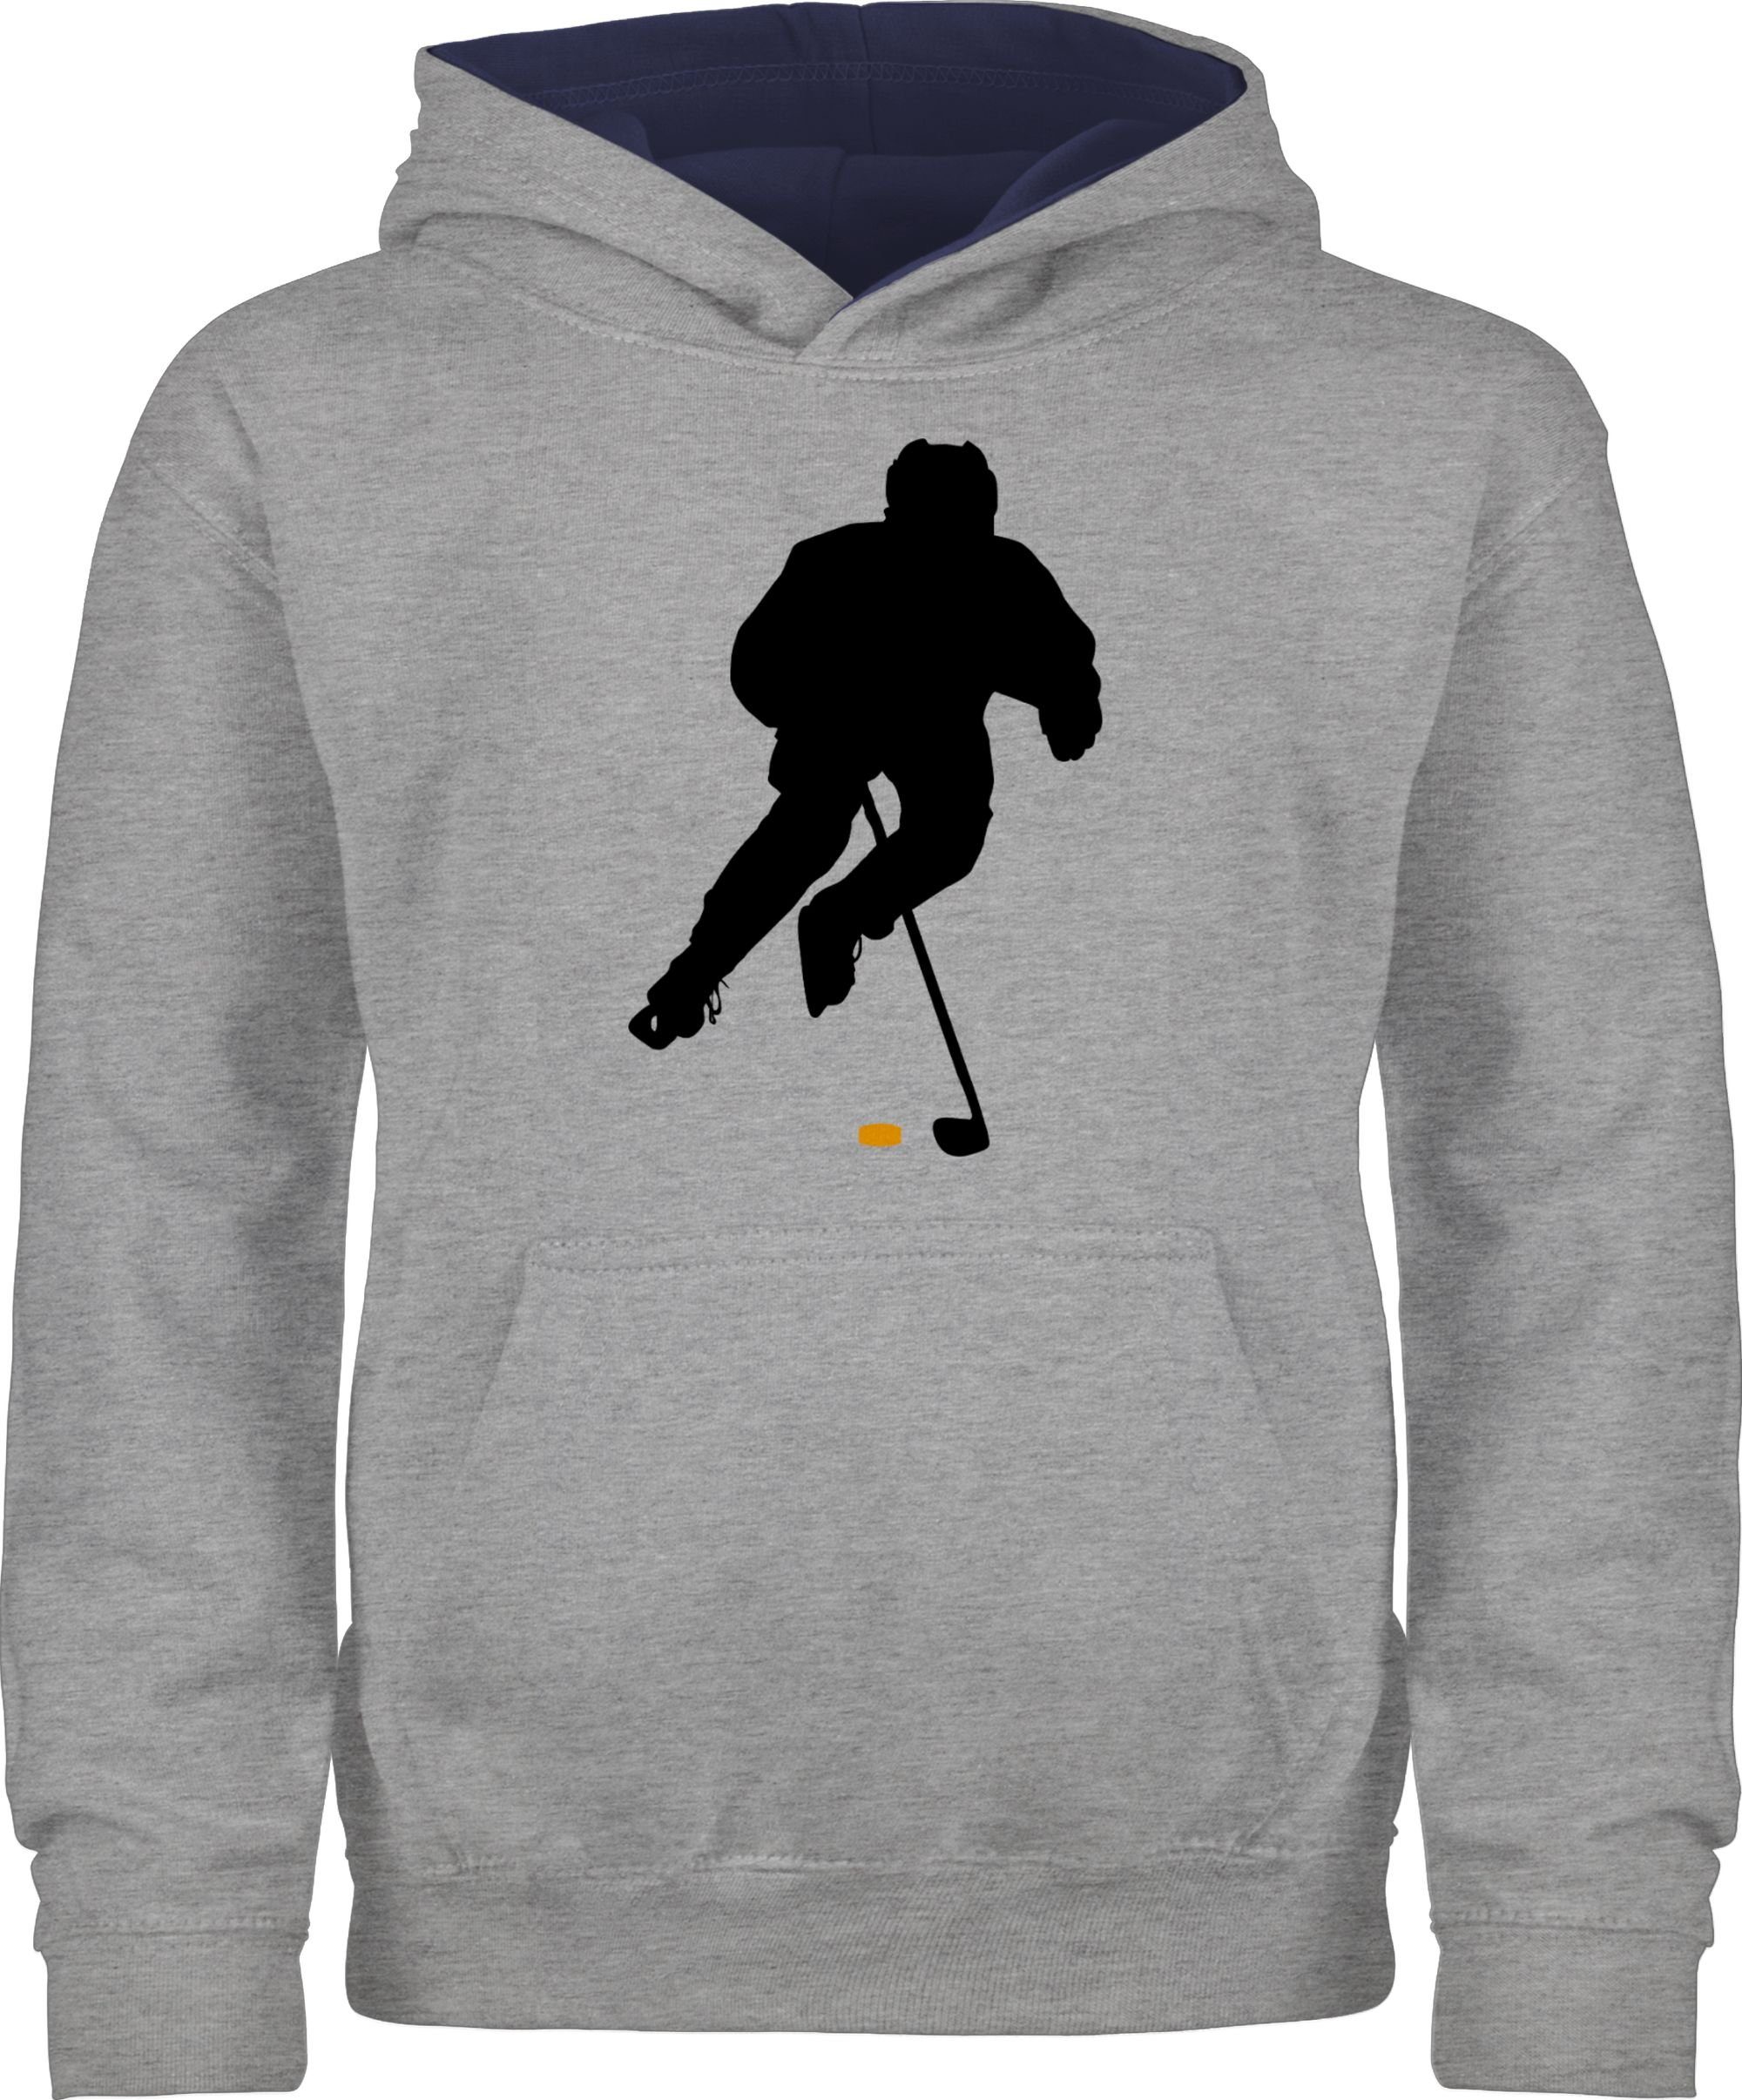 Shirtracer Hoodie Eishockey Spieler Kinder Sport Kleidung 2 Grau meliert/Navy Blau